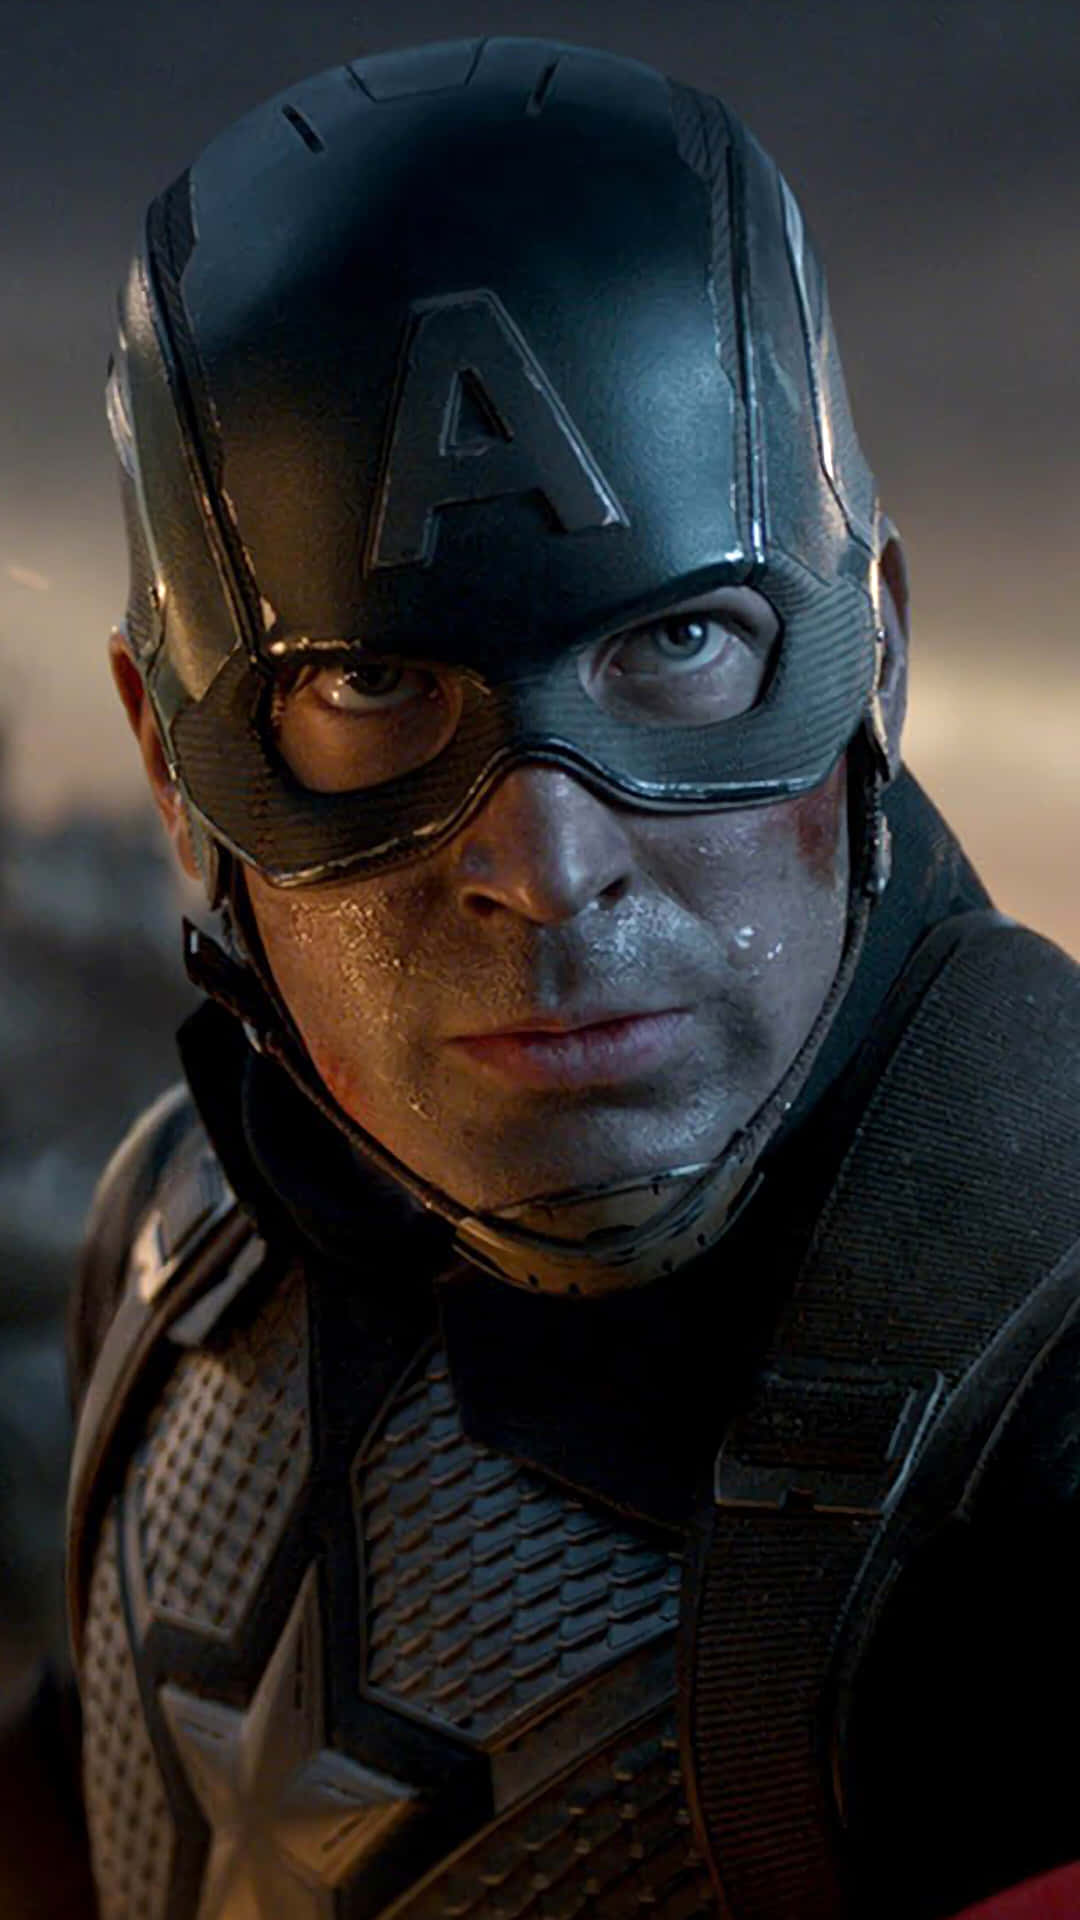 Derwahre Held, Captain America, In Aktion Im Spannenden Marvel Blockbuster Endgame. Wallpaper